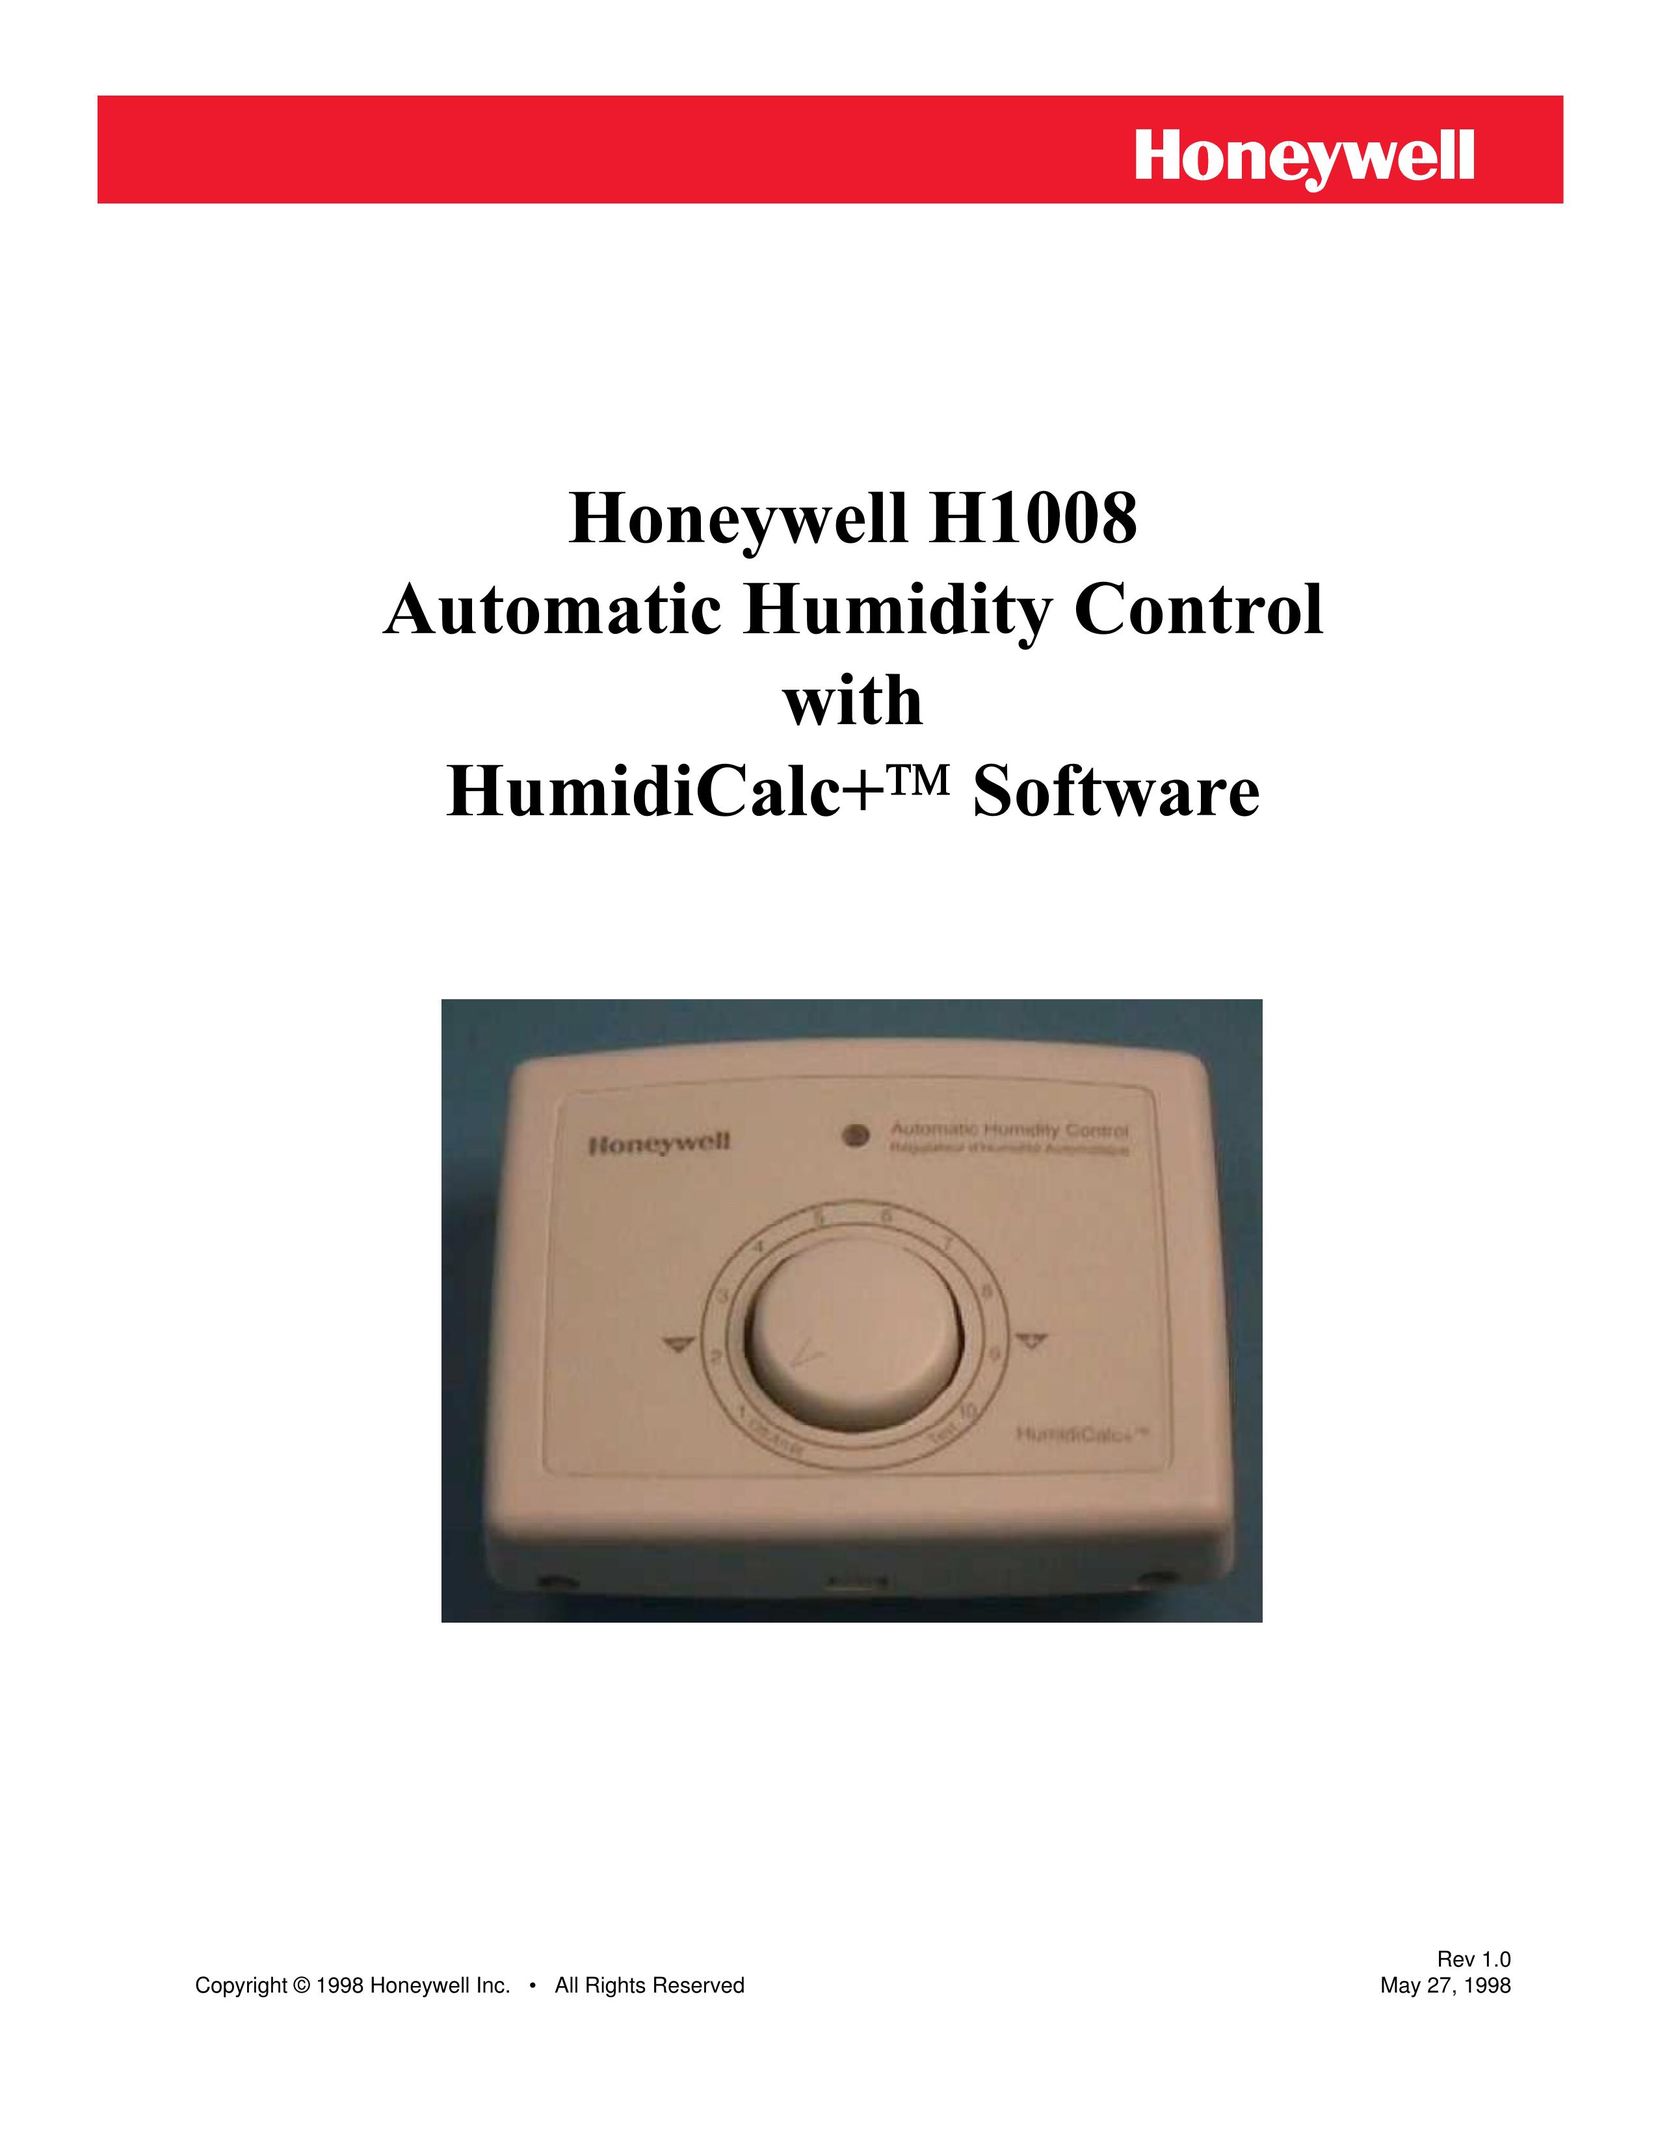 Honeywell H1008 Dehumidifier User Manual